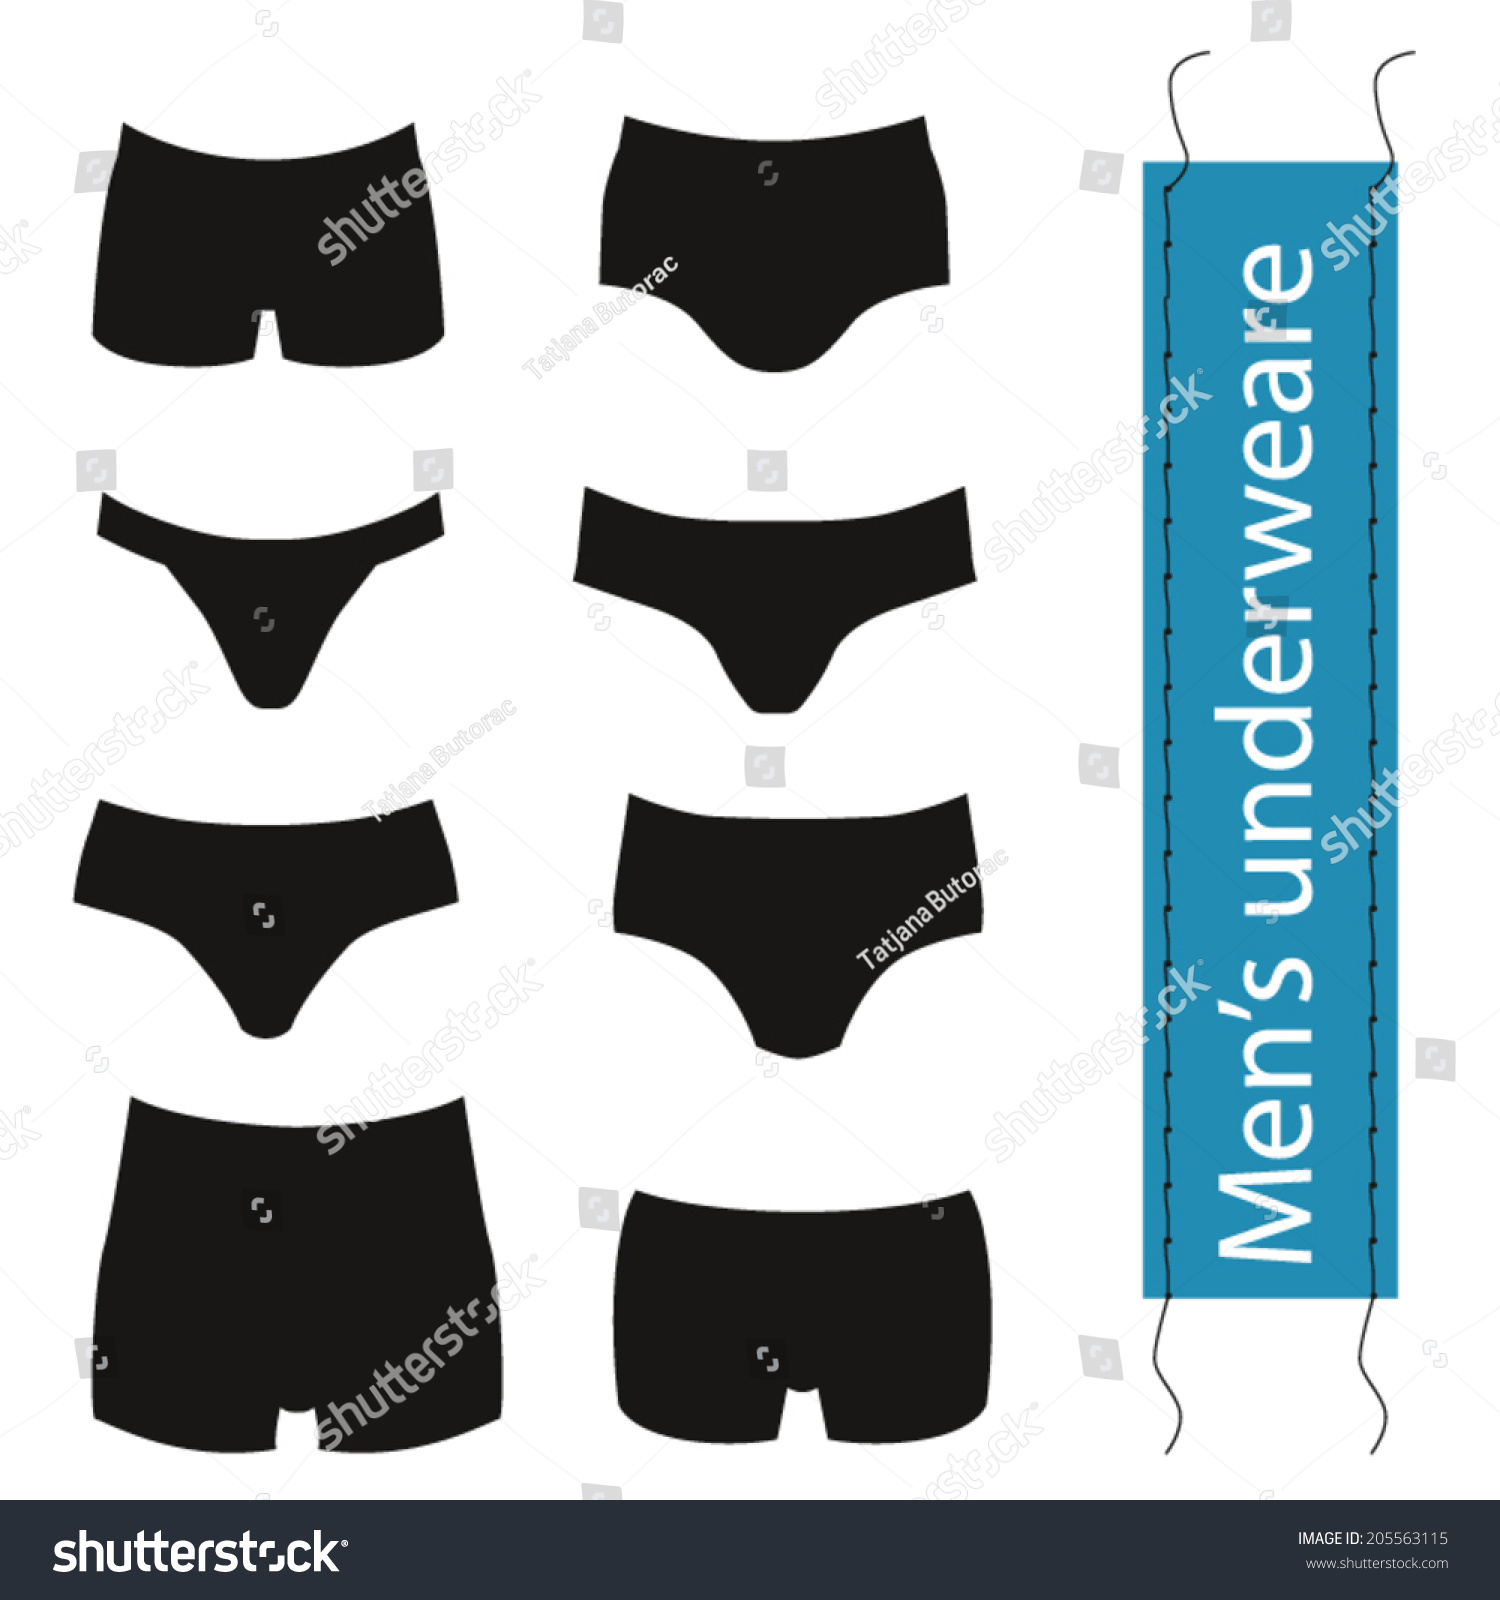 Men Underwear Pants Silhouette Stock Vector Illustration 205563115 ...